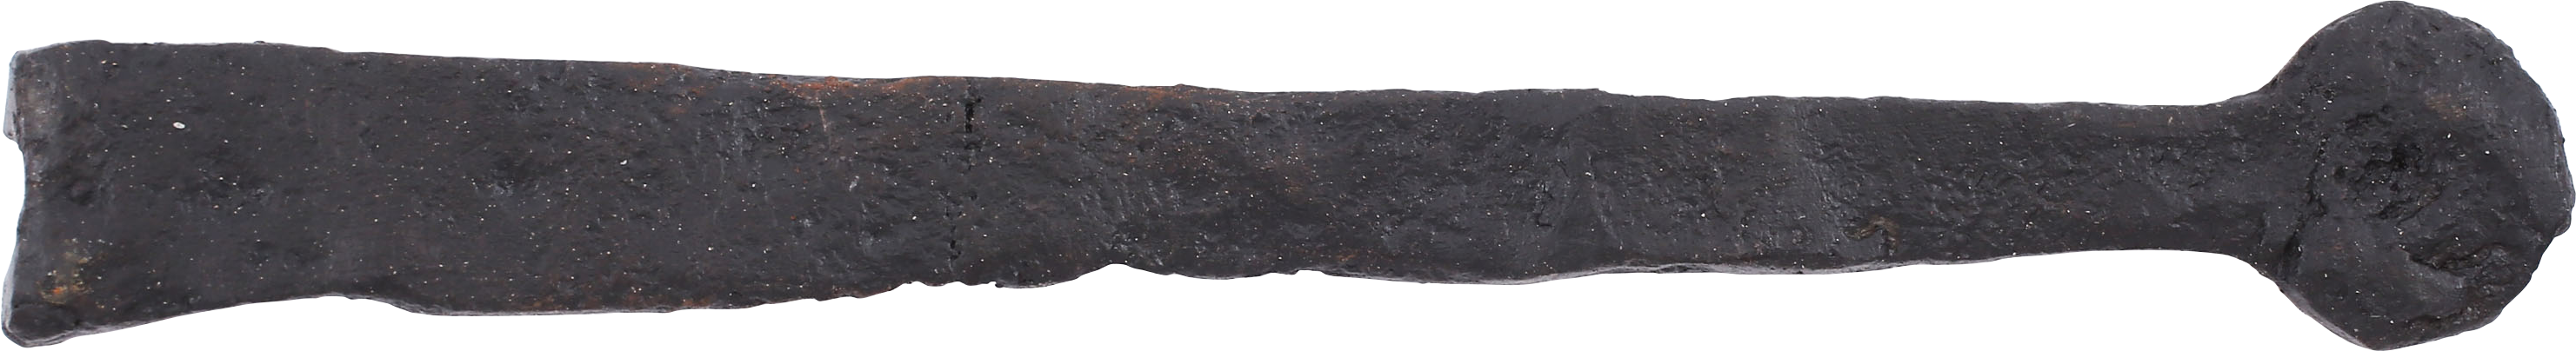 VIKING SLAVE SHACKLE KEY C.900 AD - Fagan Arms